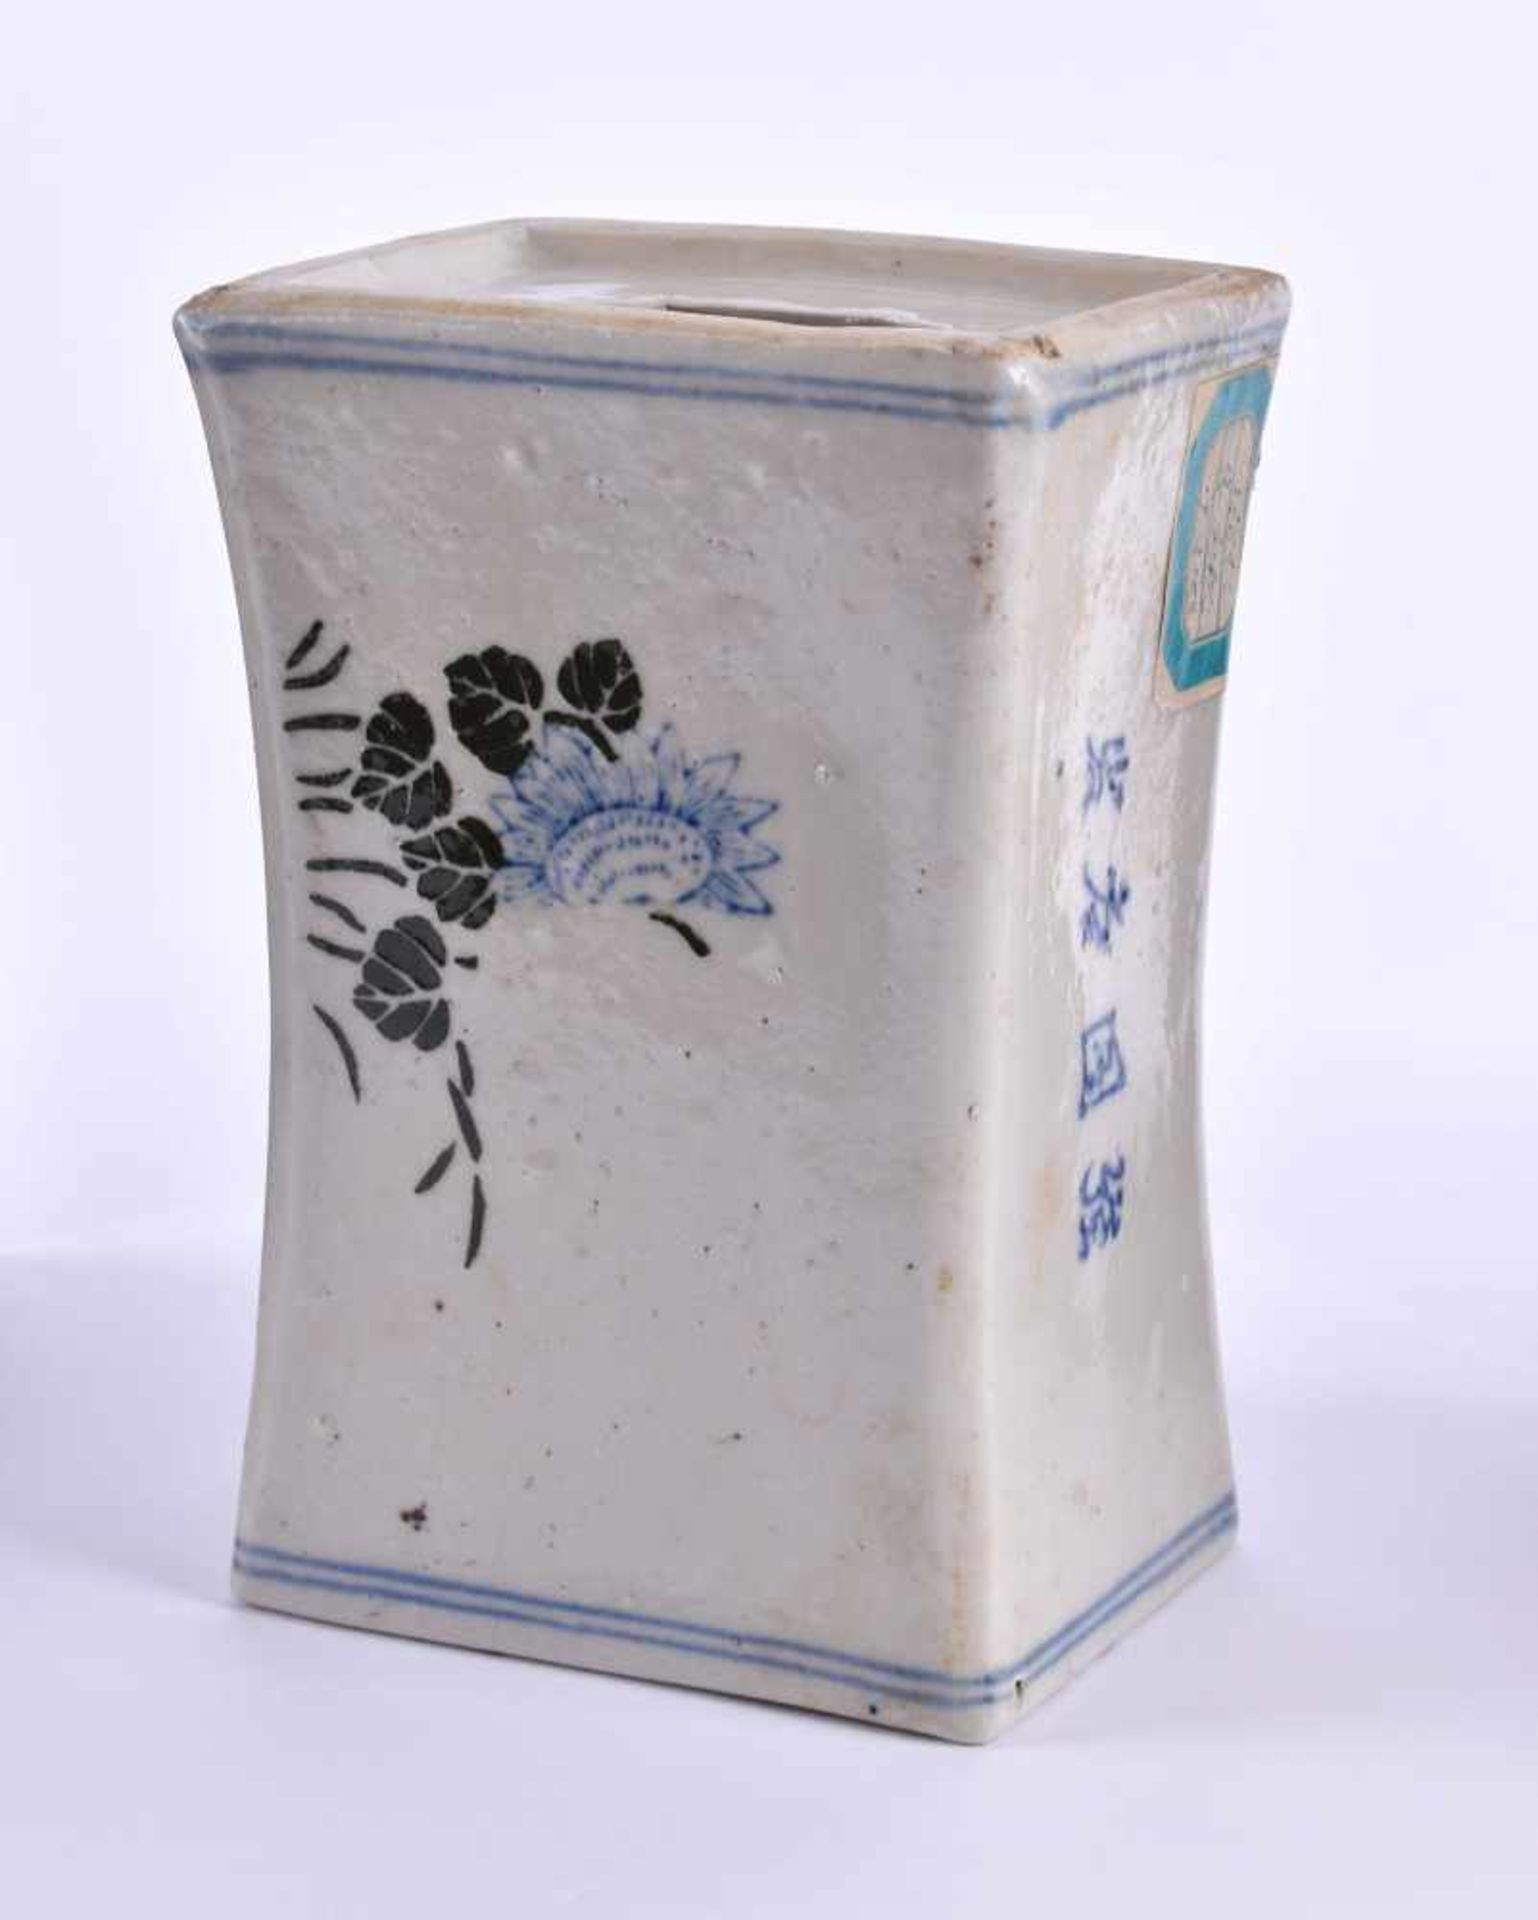 Nackenstütze China Qing Periodemit blau-weiß Malerei, 16,8 cm x 11,5 cm x 8 cmNeck rest China Qing